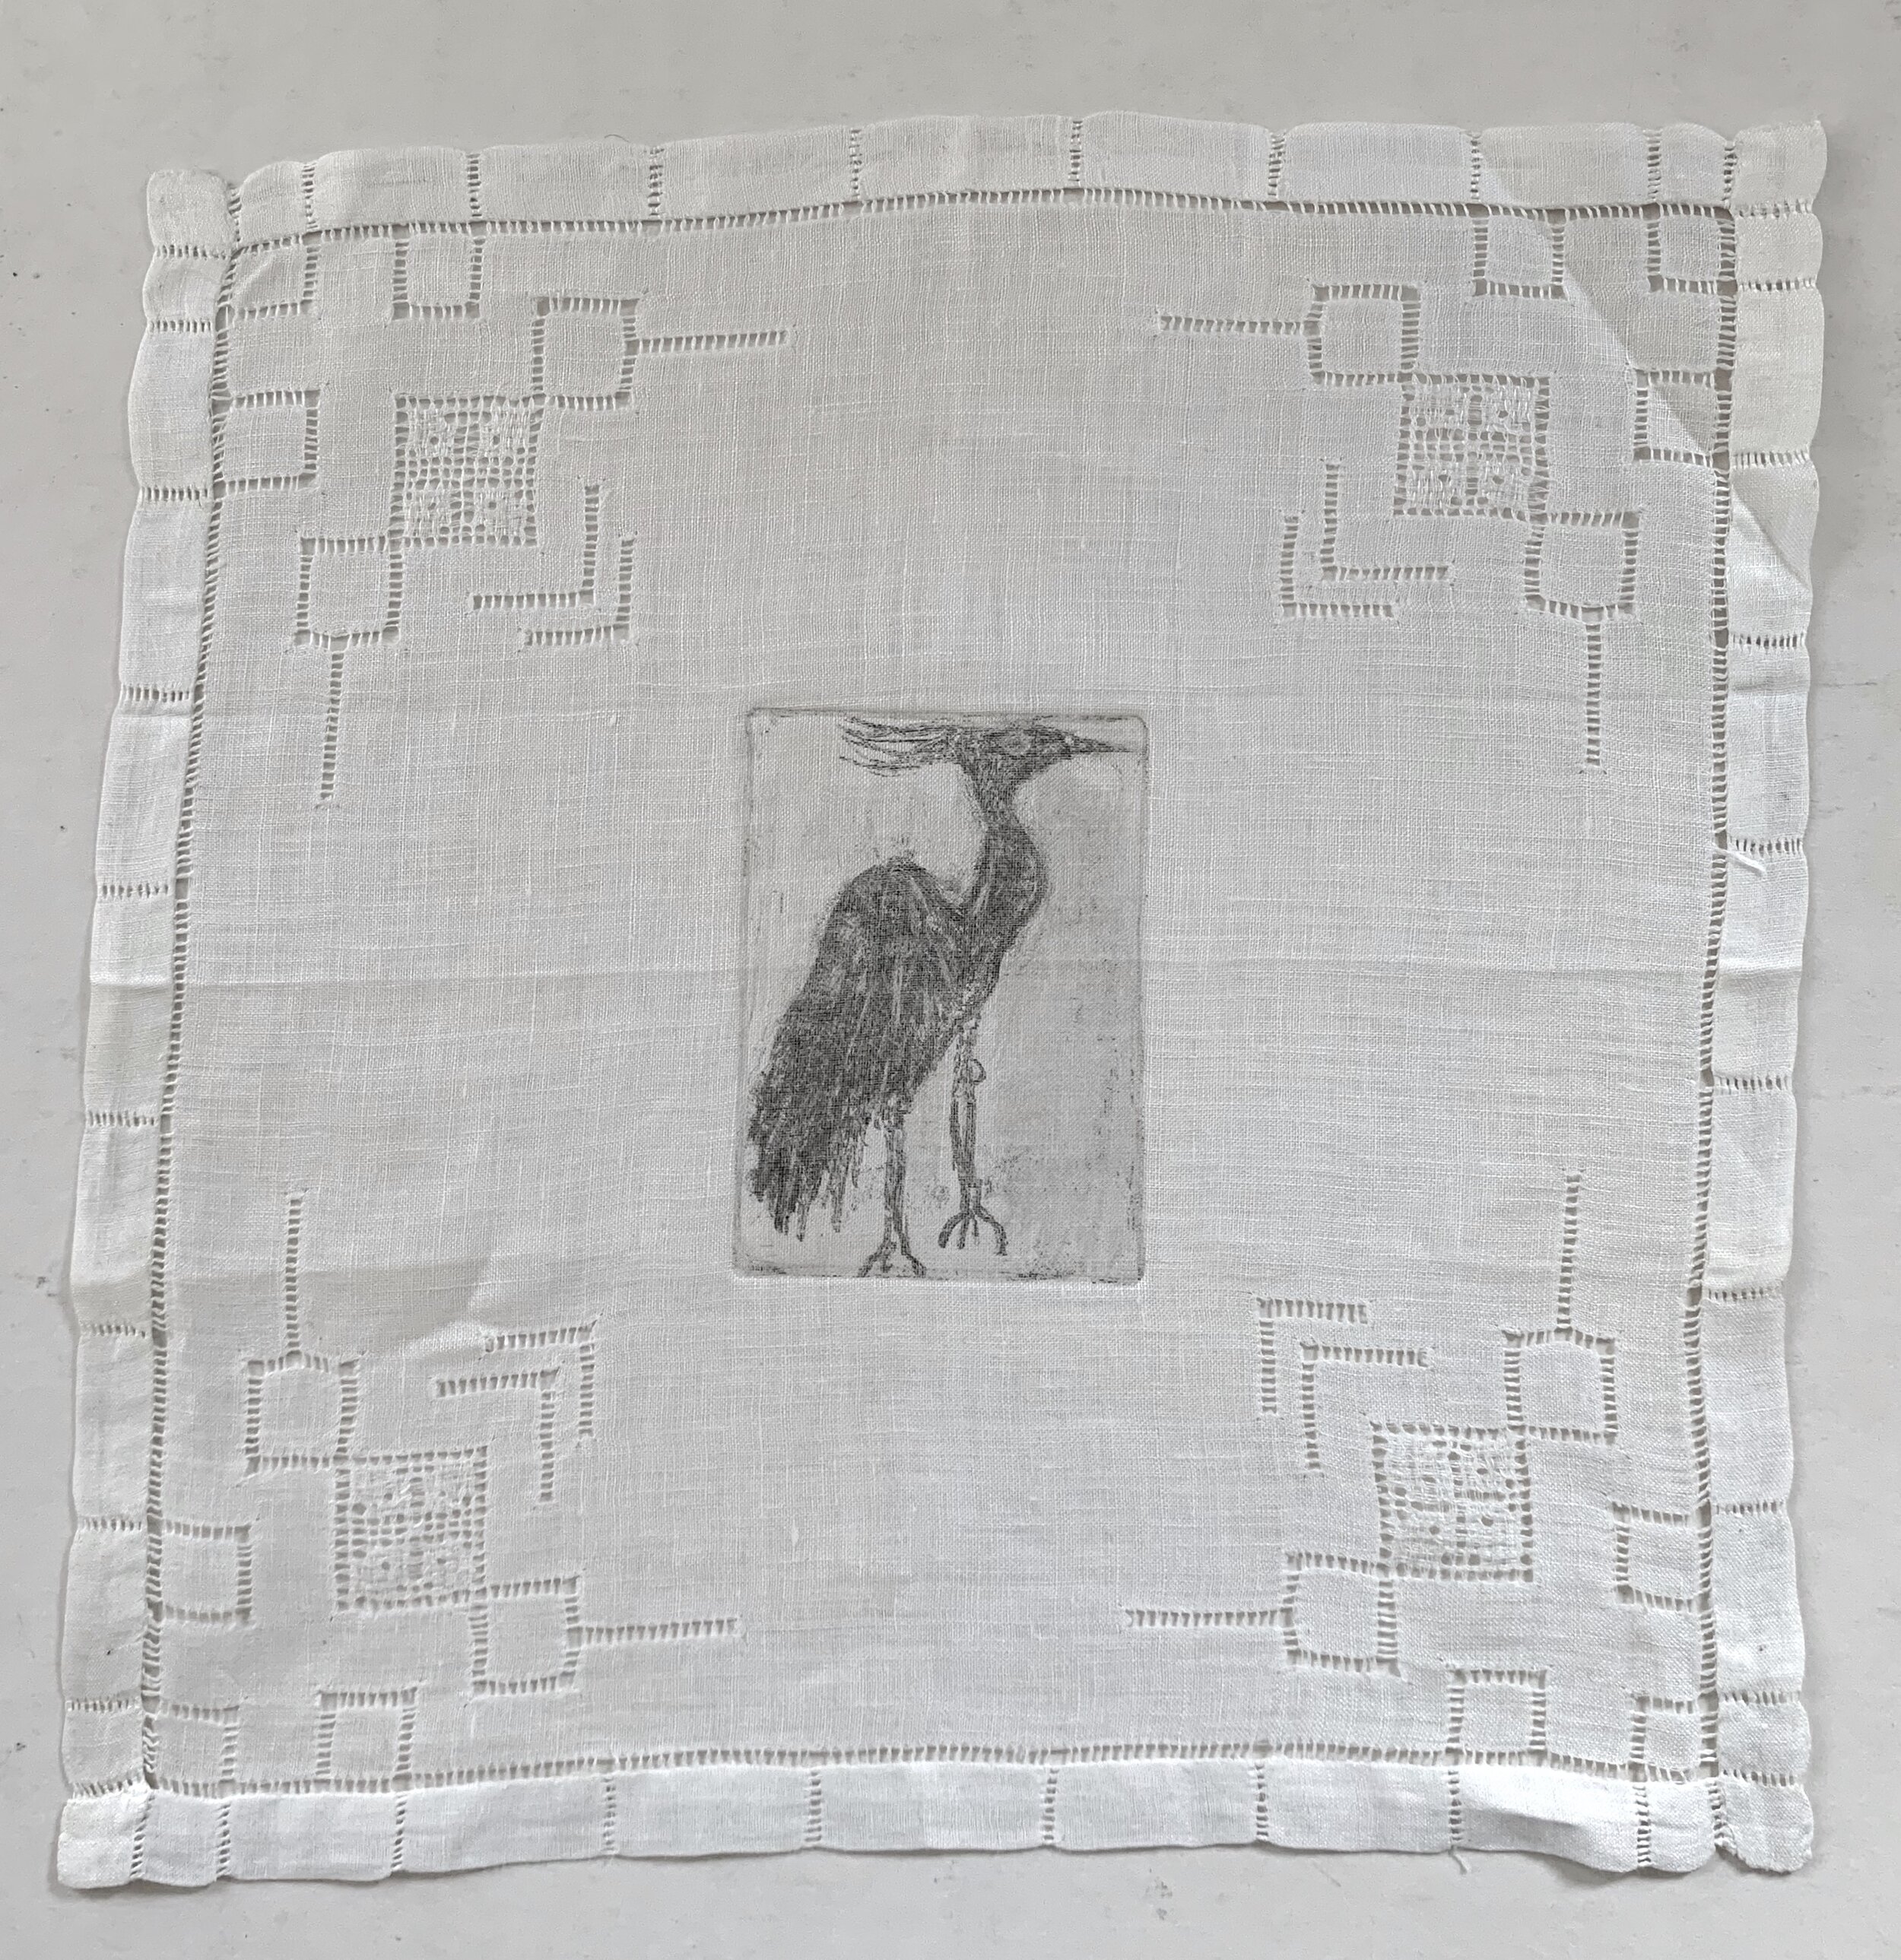 Heron on Antique Handkerchief